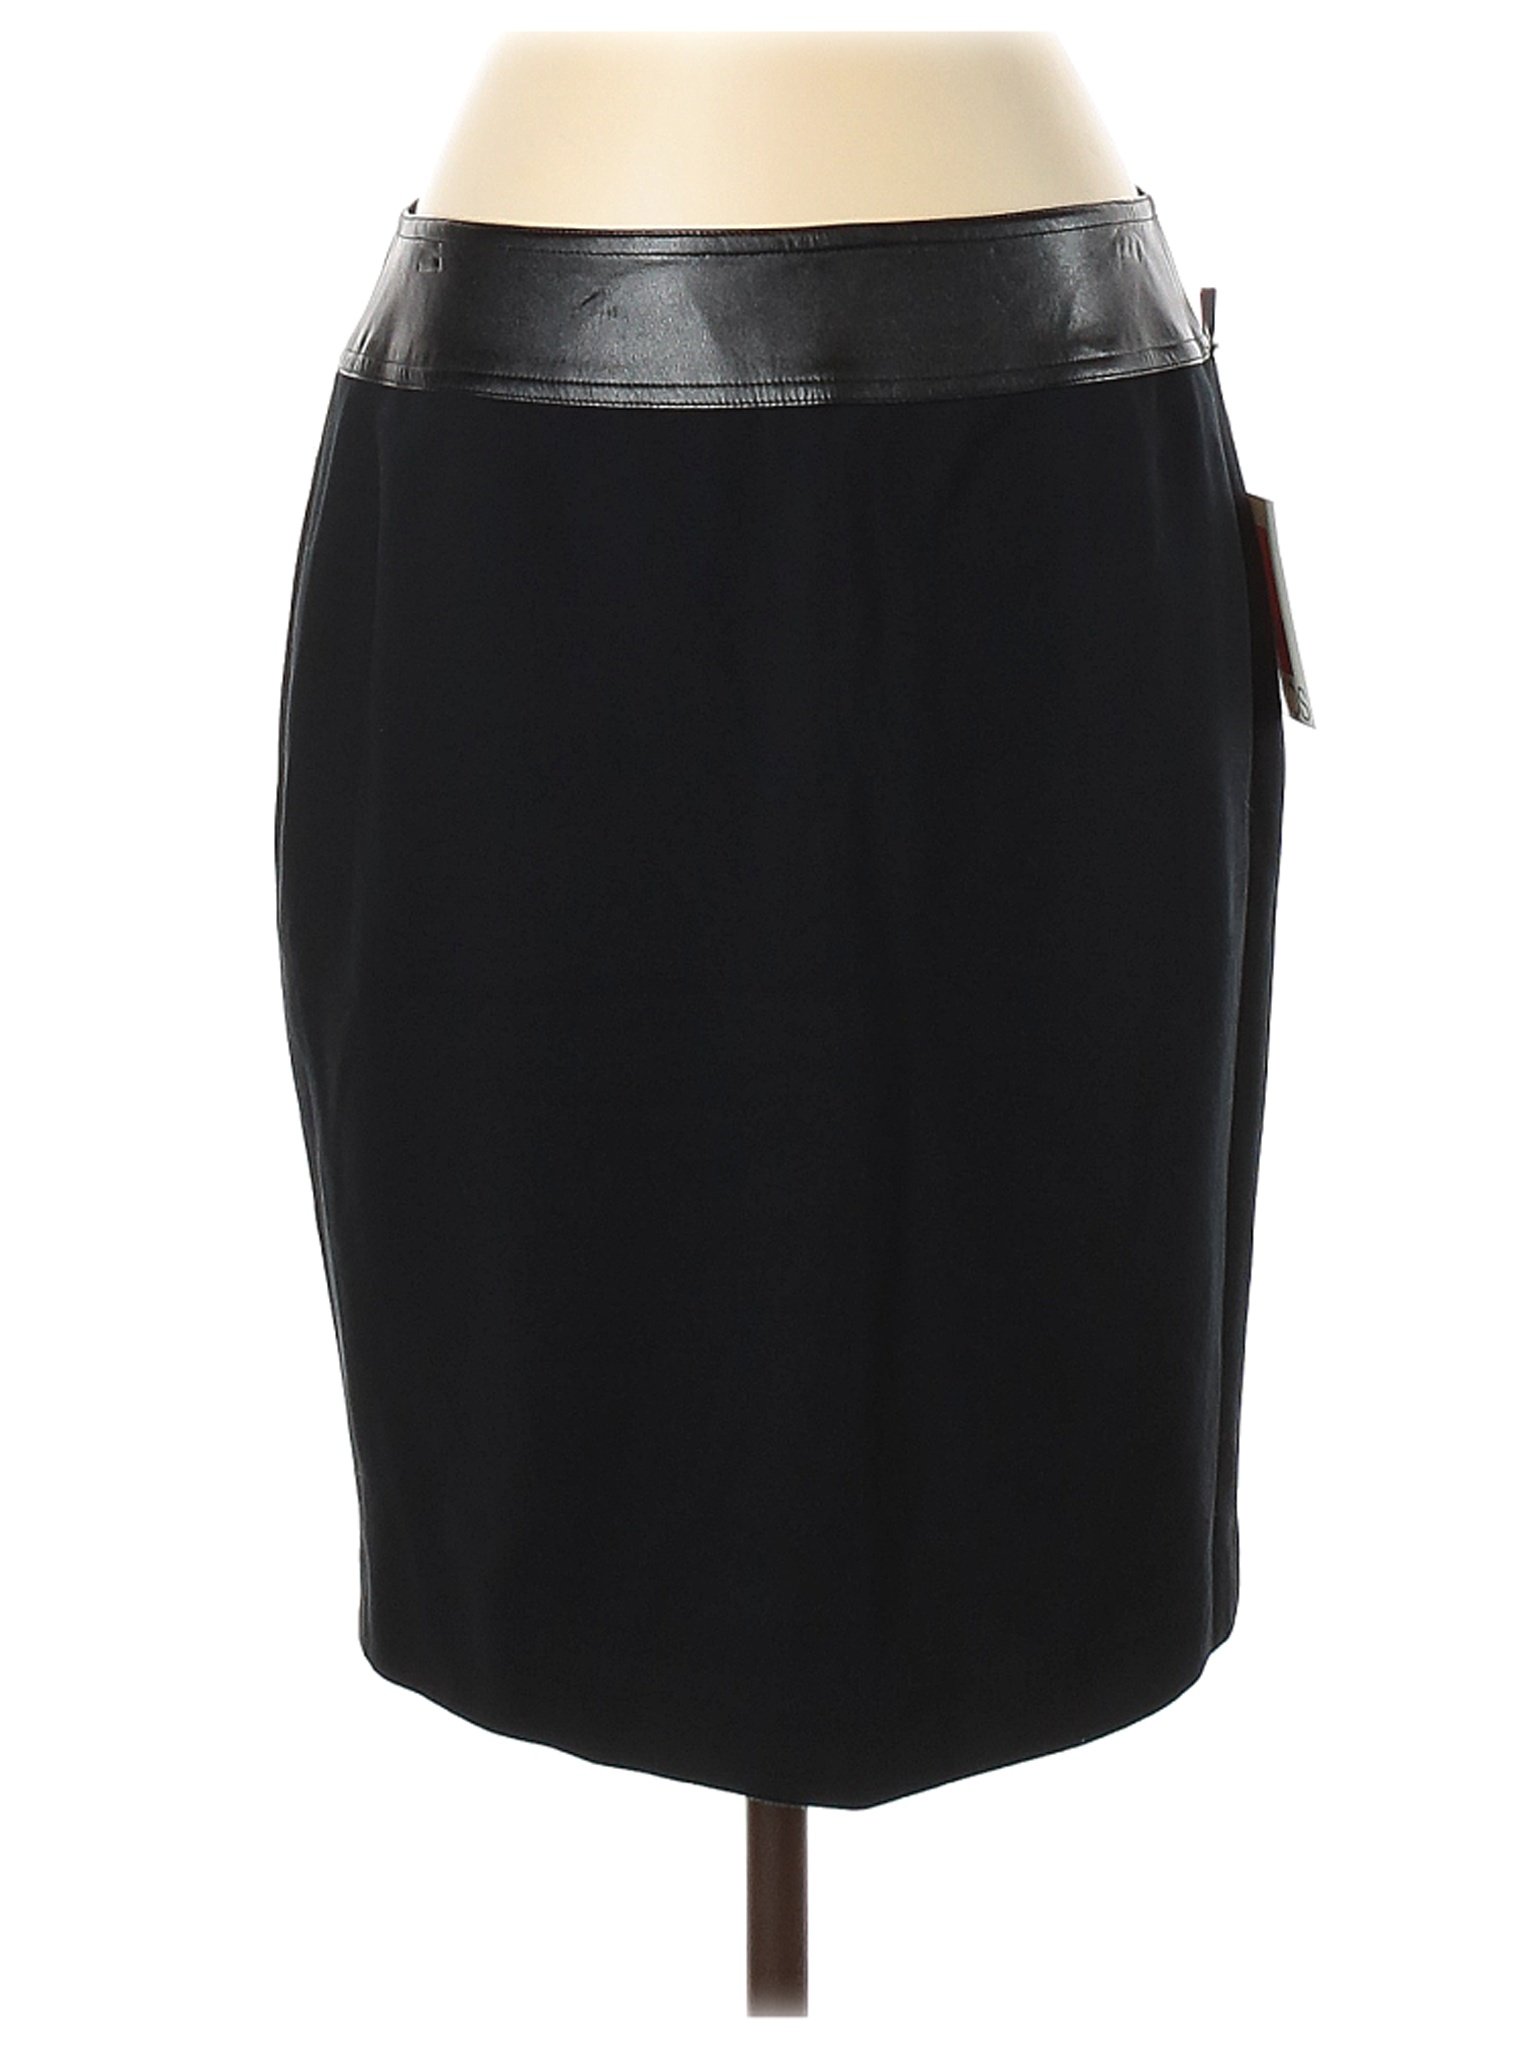 NWT Jana Kos Women Black Casual Skirt 4 | eBay